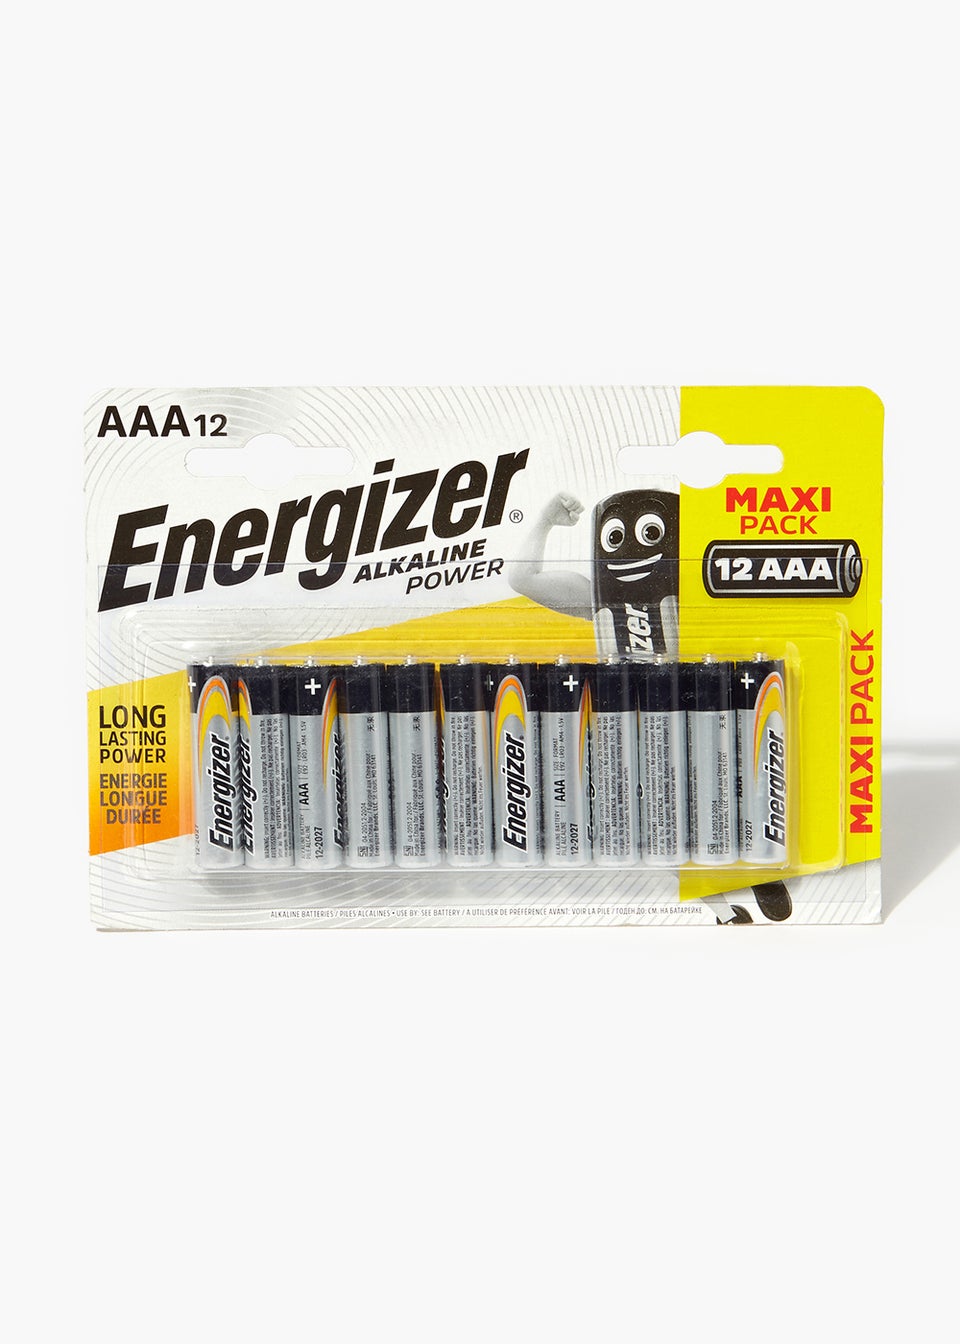 Energizer Alkaline Power AAA Batteries (12 Pack)